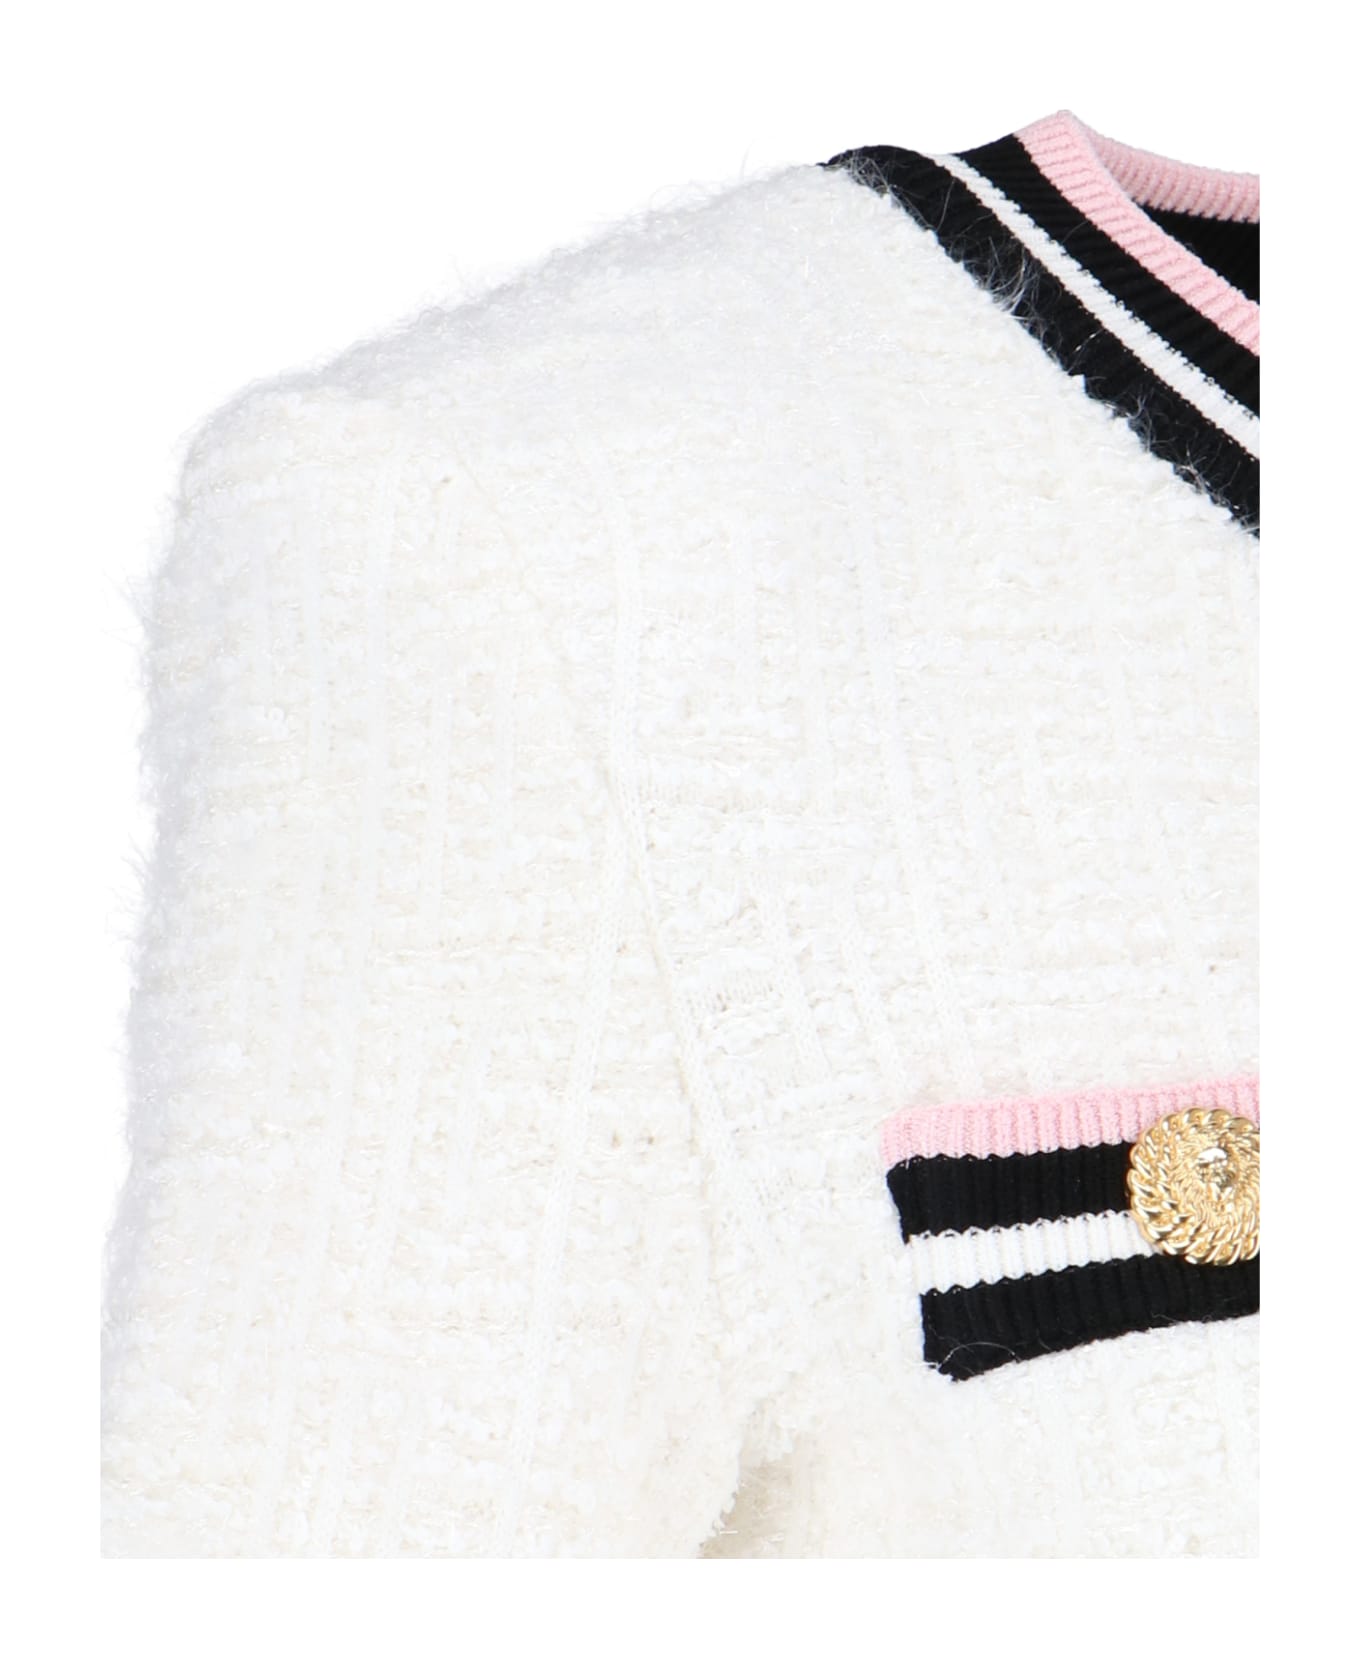 Balmain Buttoned Rnd Collar Maze Monogram Jacket - White